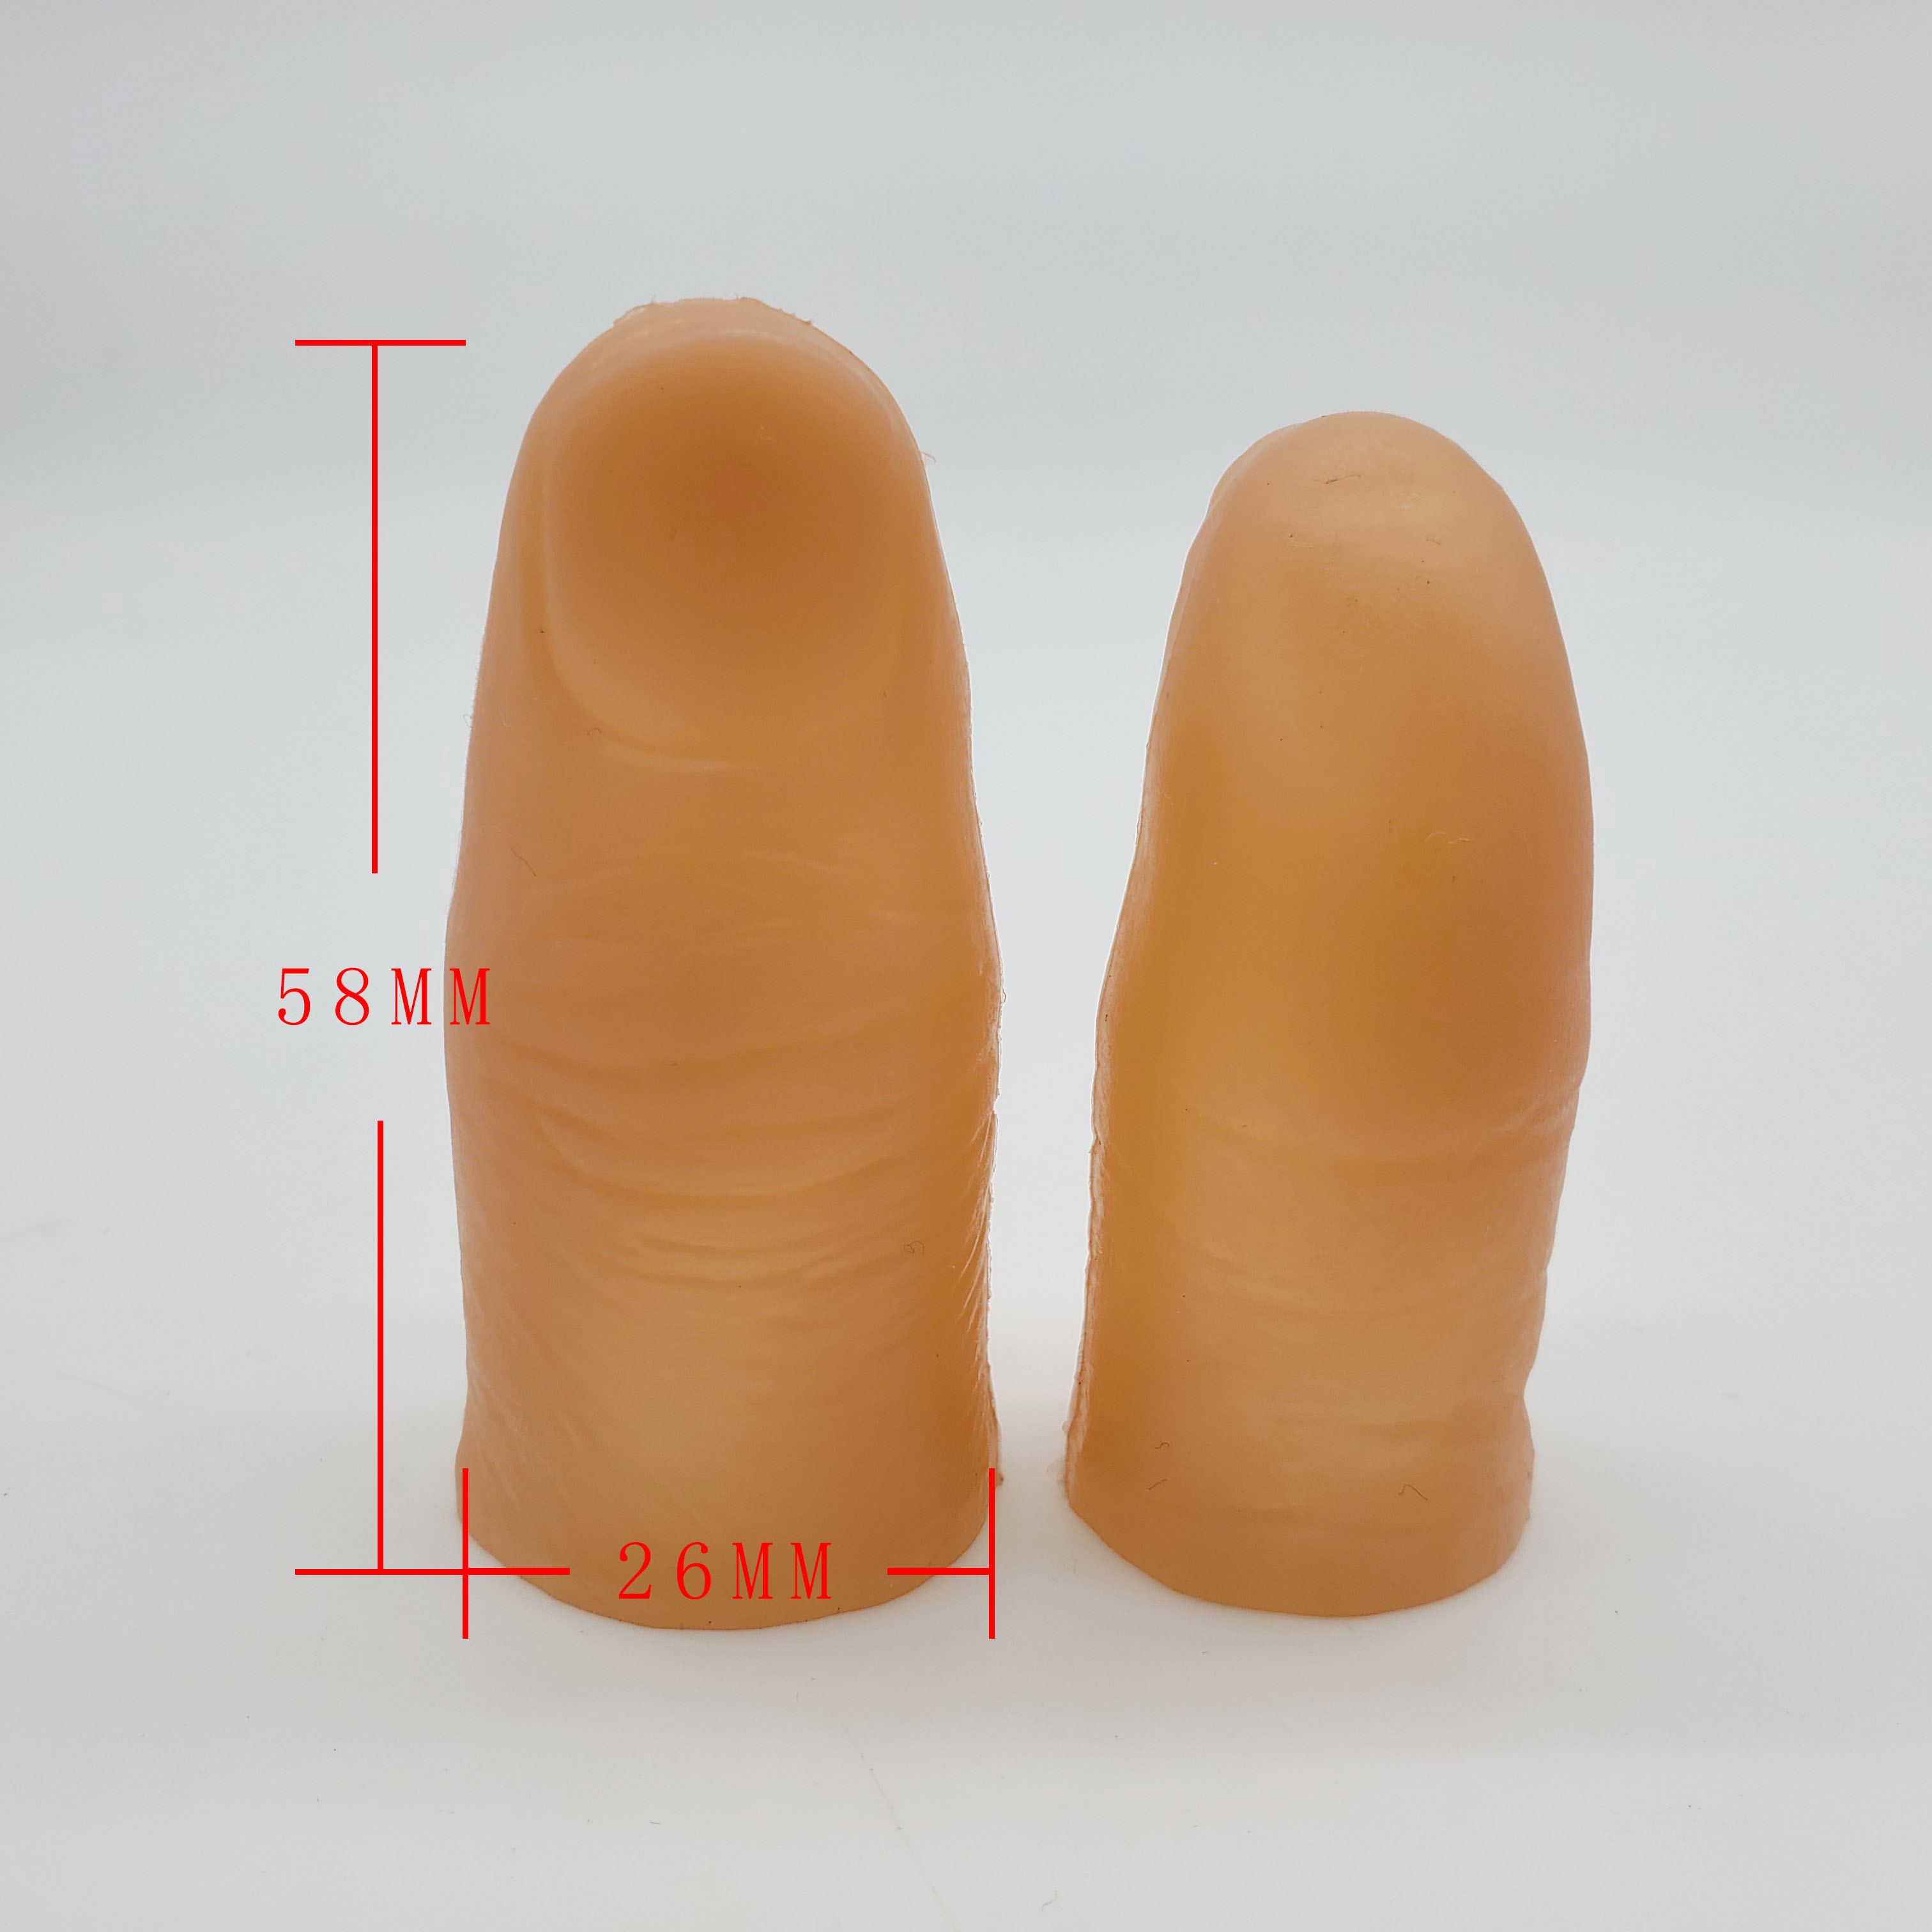 Simulation Thumb Tip (Large)